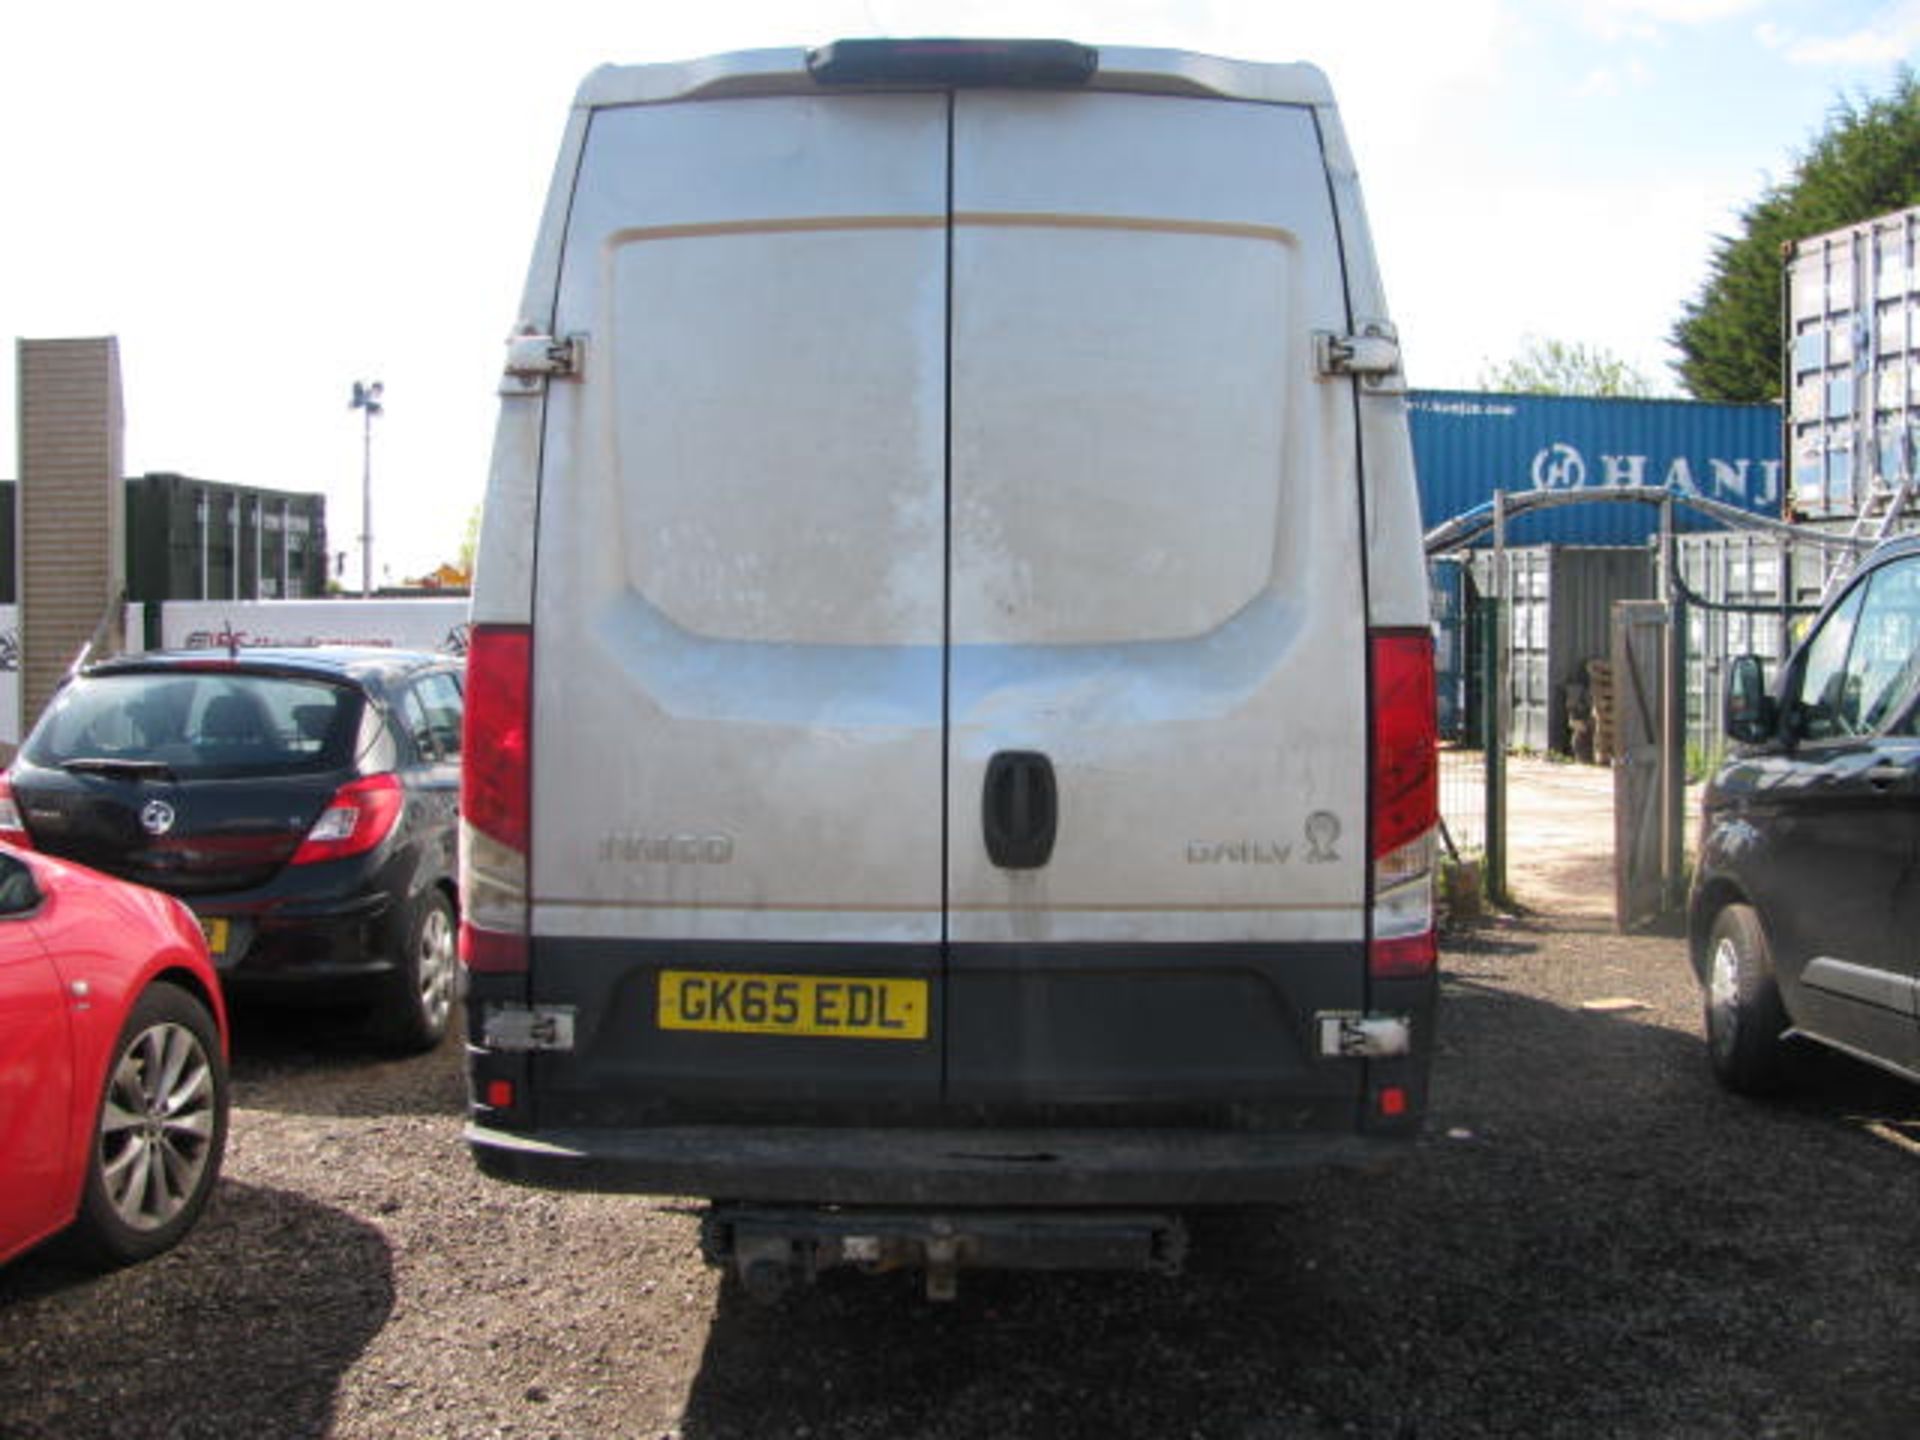 Iveco Daily 35-150 LWB panel van, Registration No. GK65 EDL - Image 6 of 7